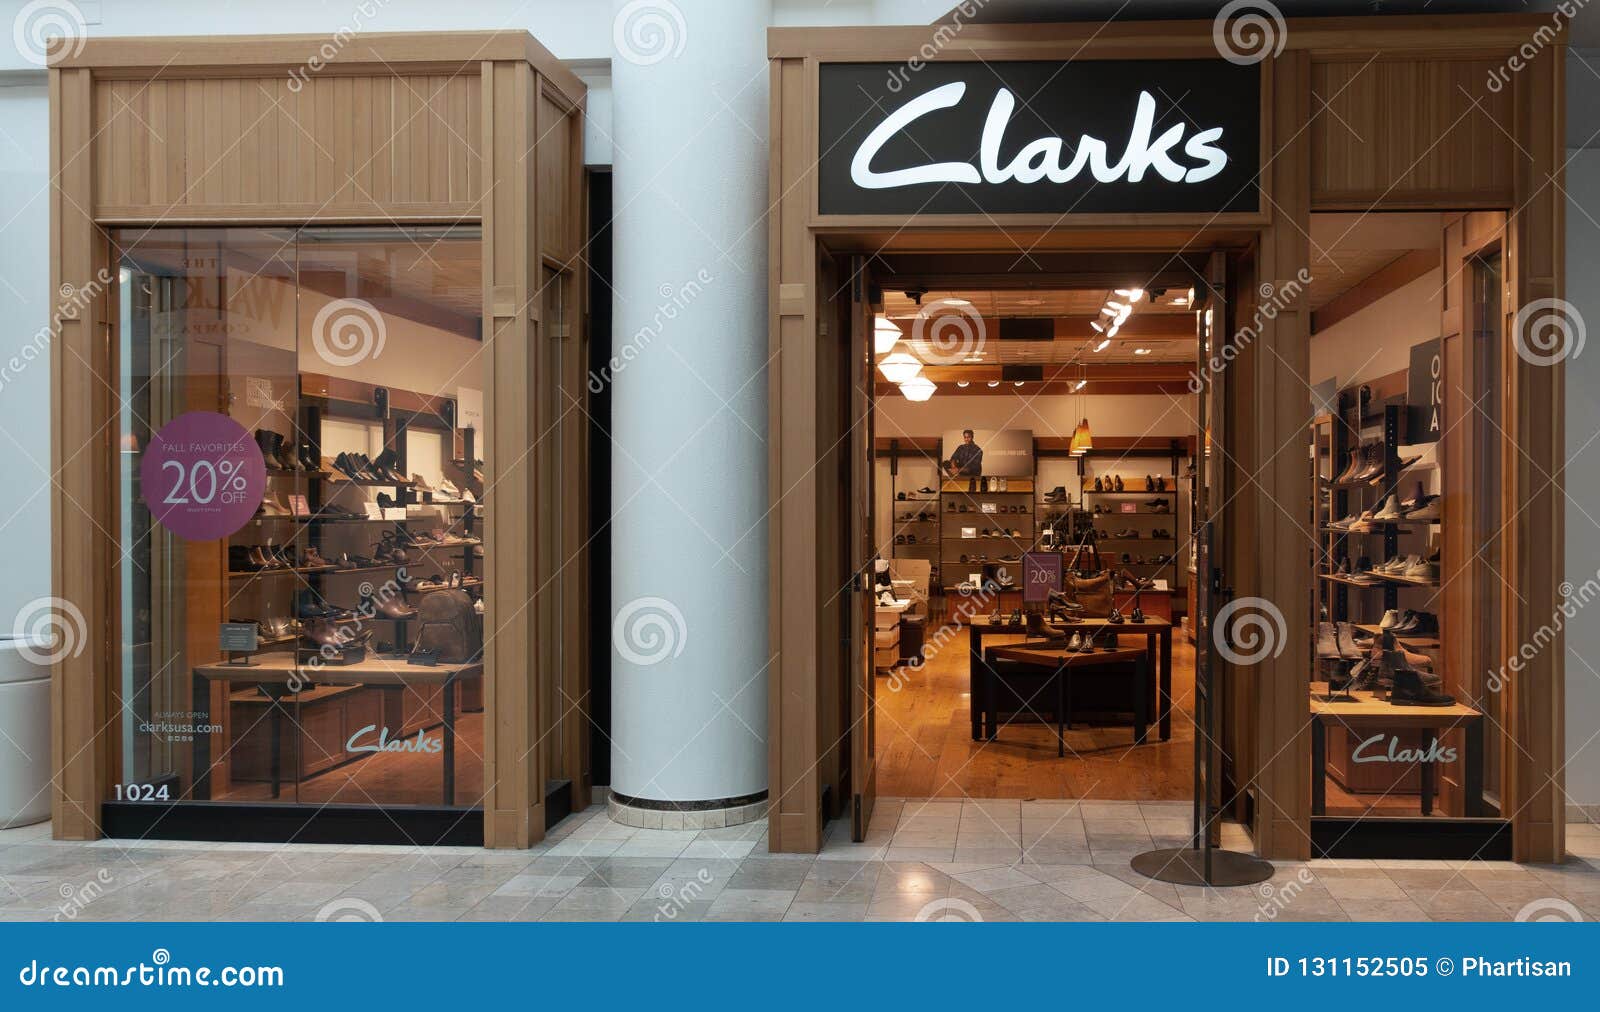 clarks shoes outlet miami fl